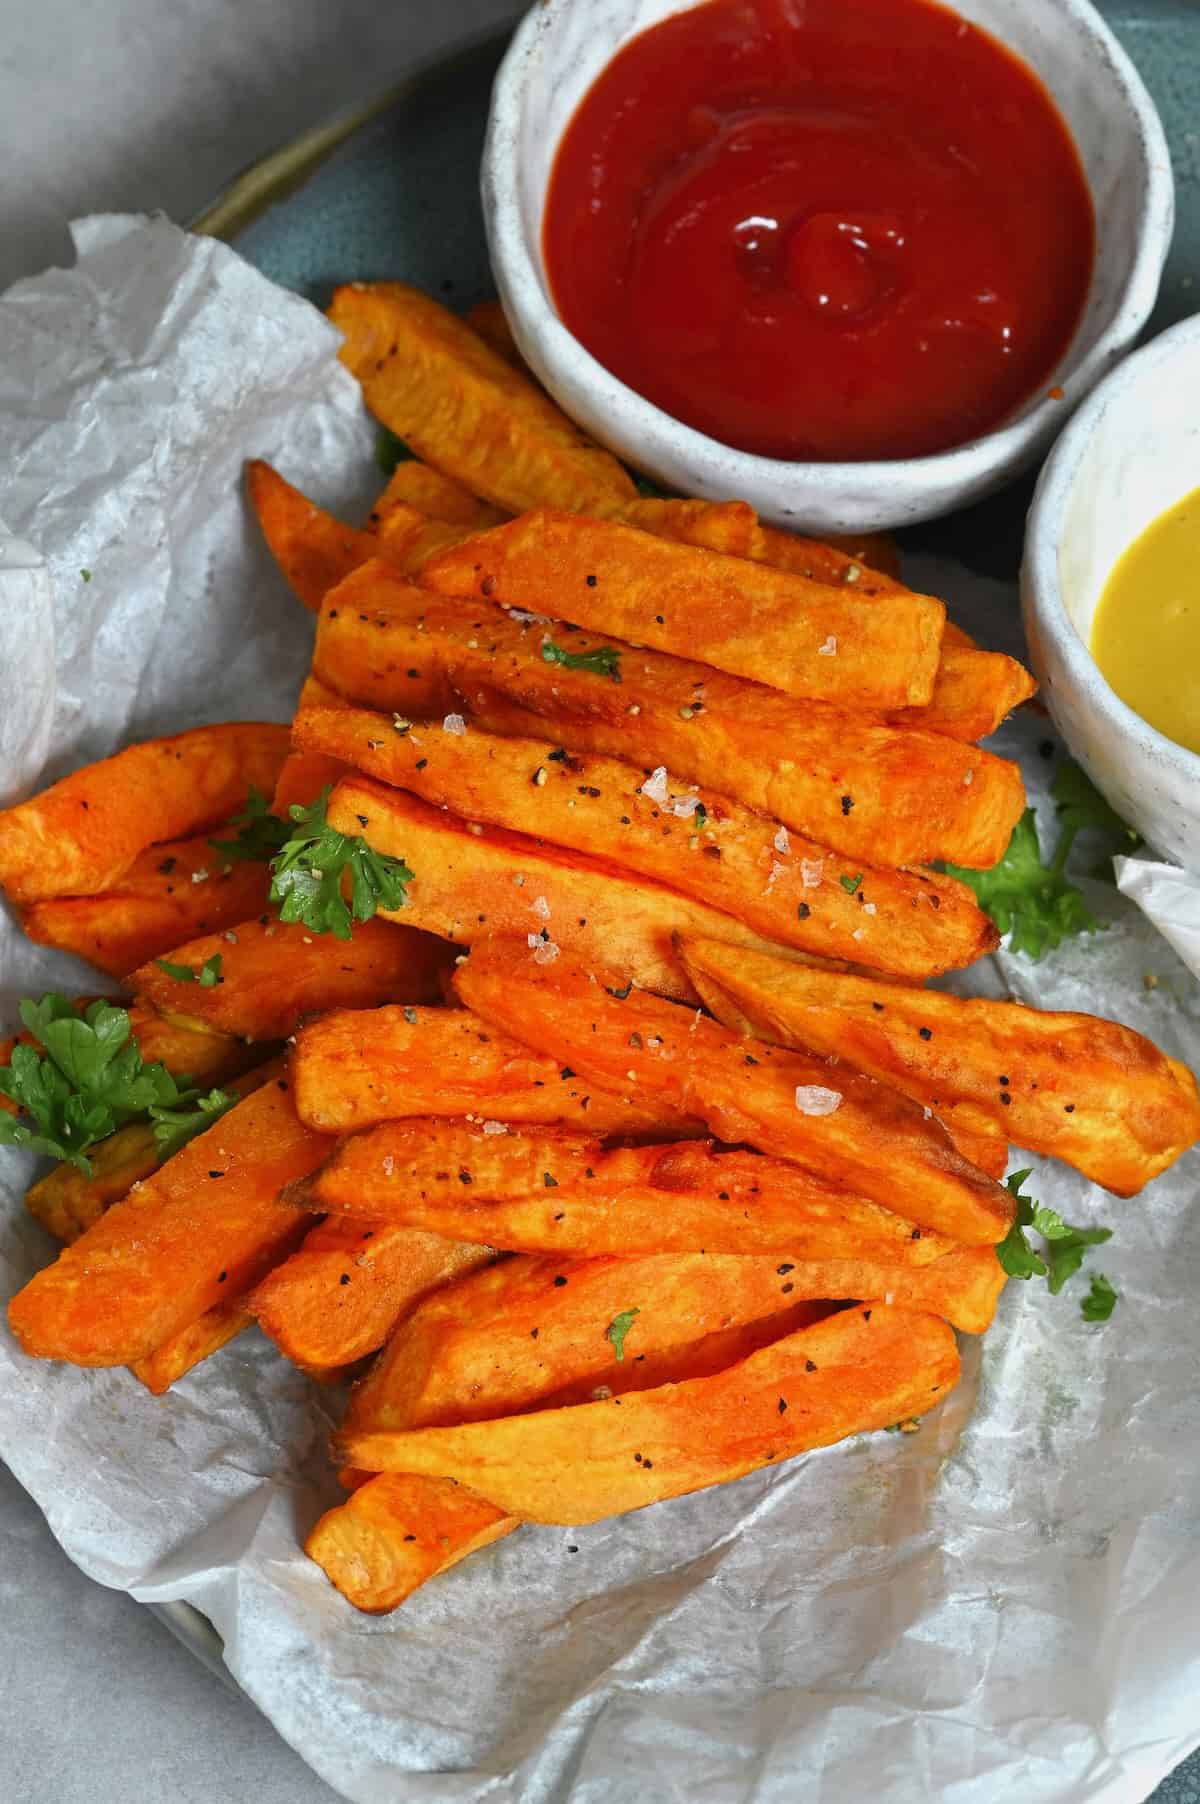 A serving of sweet potato fries